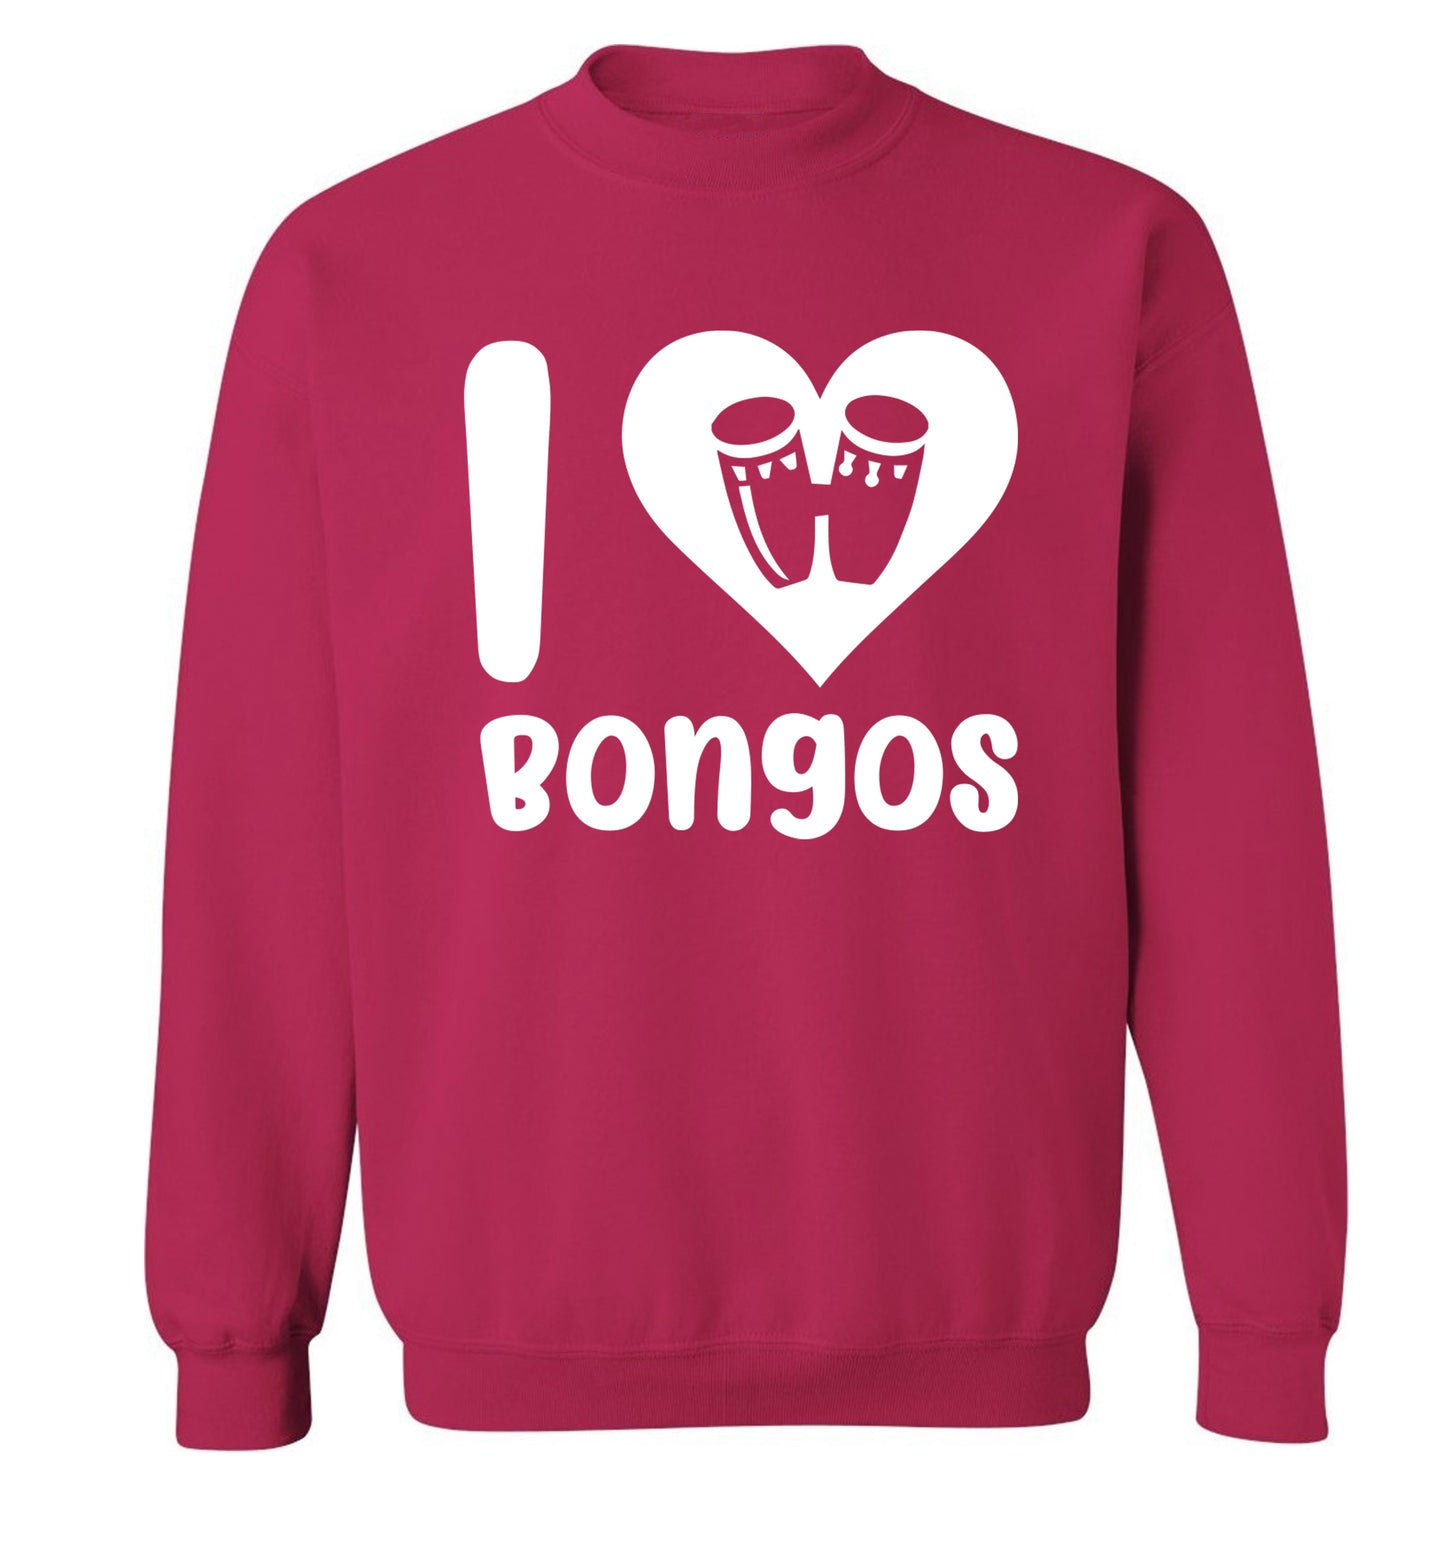 I love bongos Adult's unisex pink Sweater 2XL